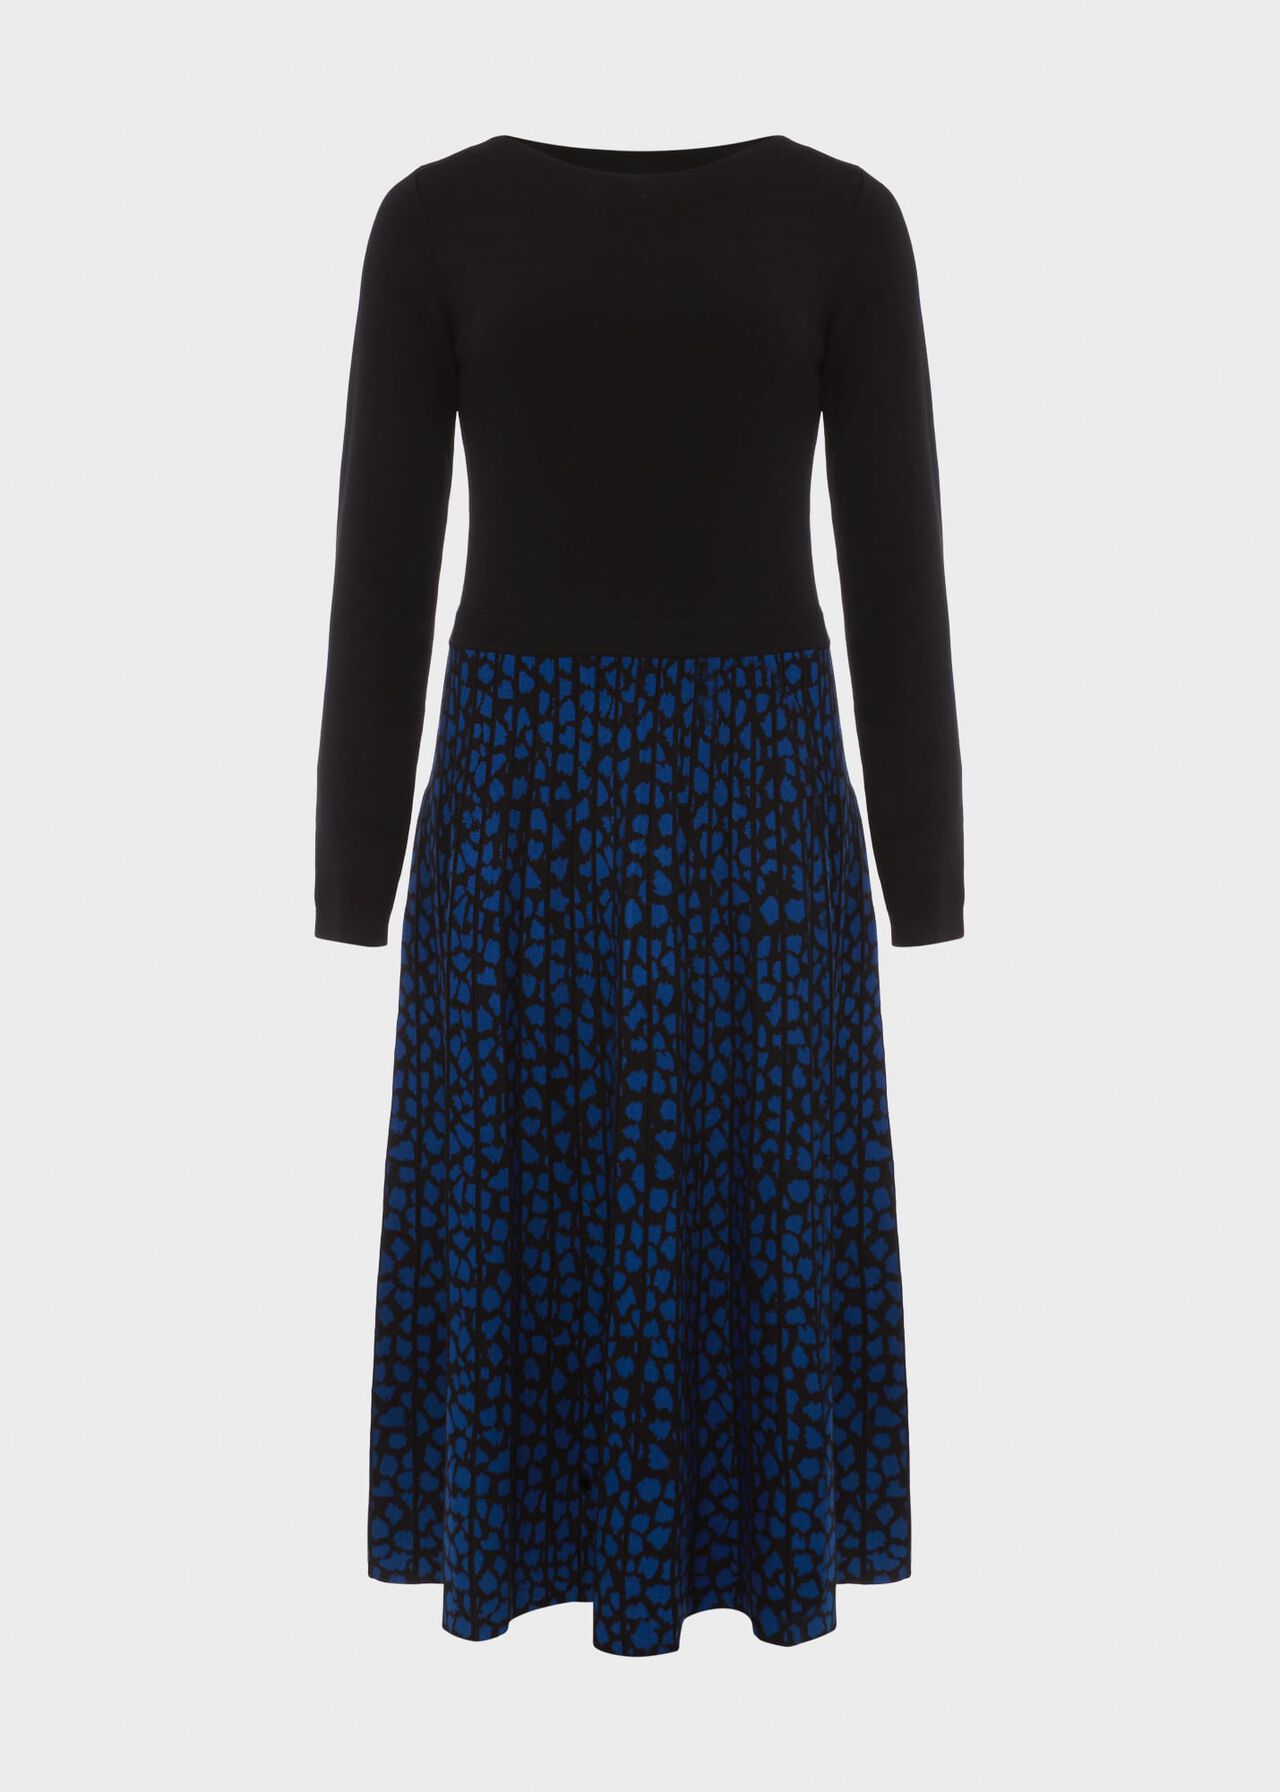 Elena Knitted Dress, Black Blue, hi-res